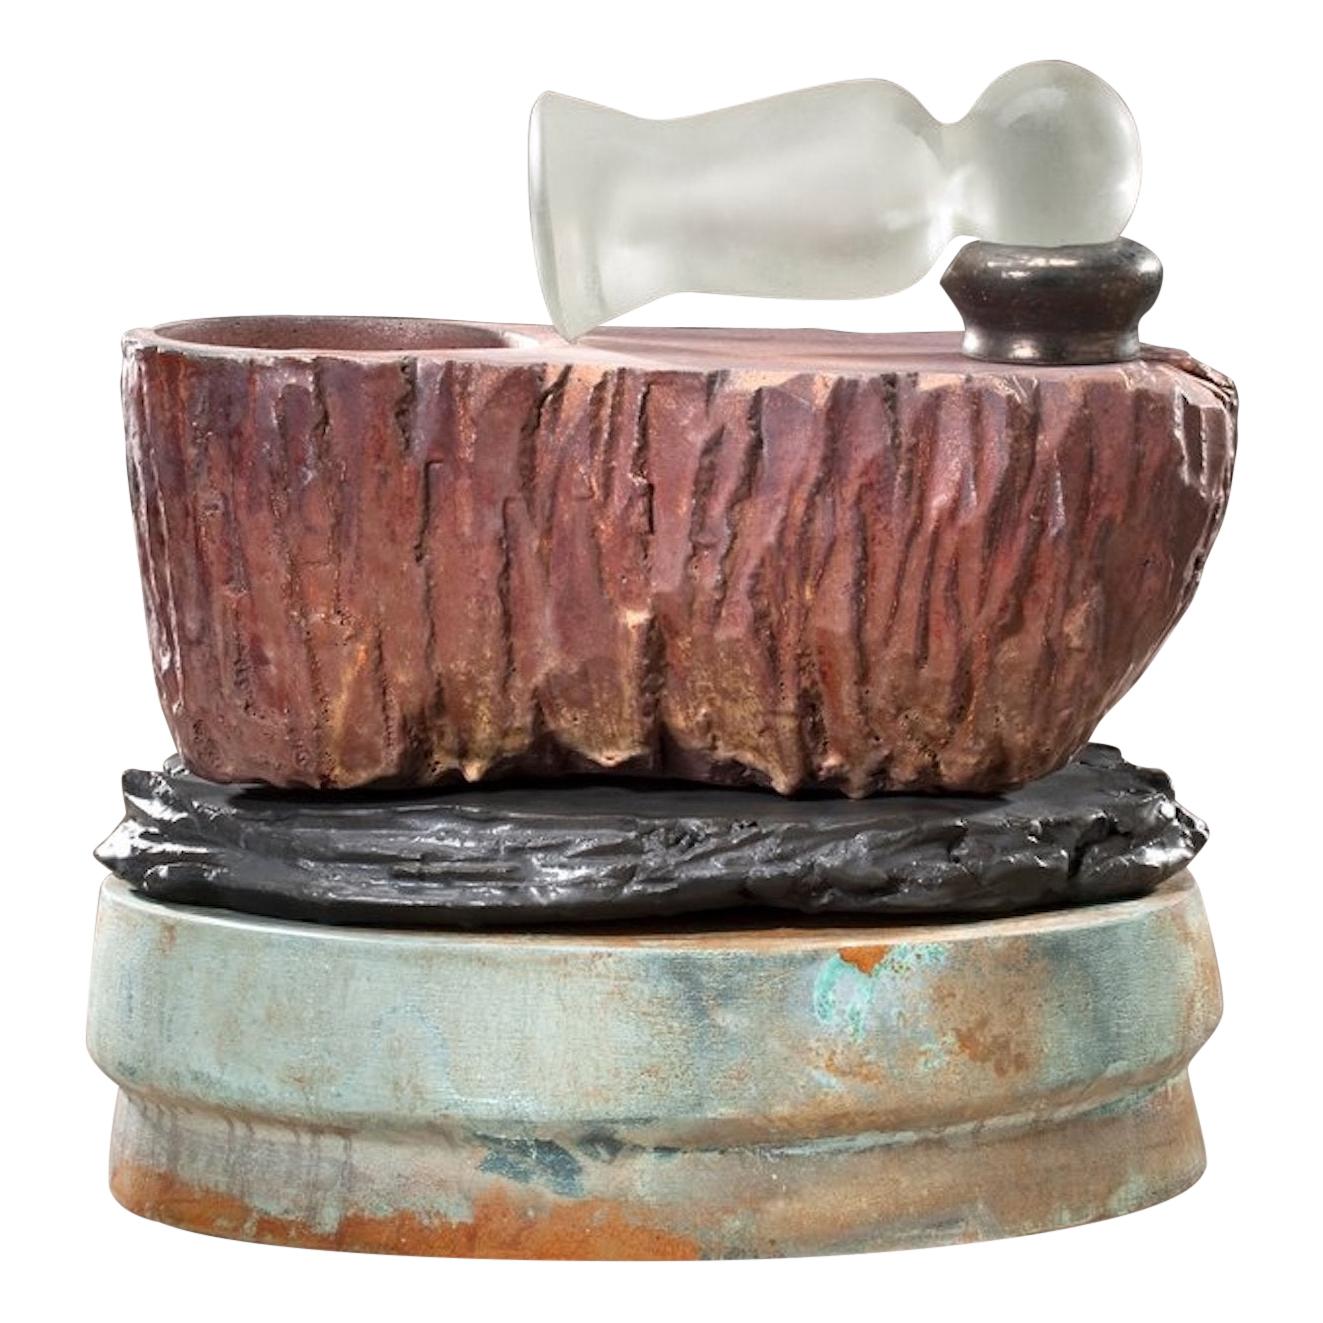 Richard Hirsch Ceramic Mortar and Hot Blown Glass Pestle Sculpture, 2009 For Sale